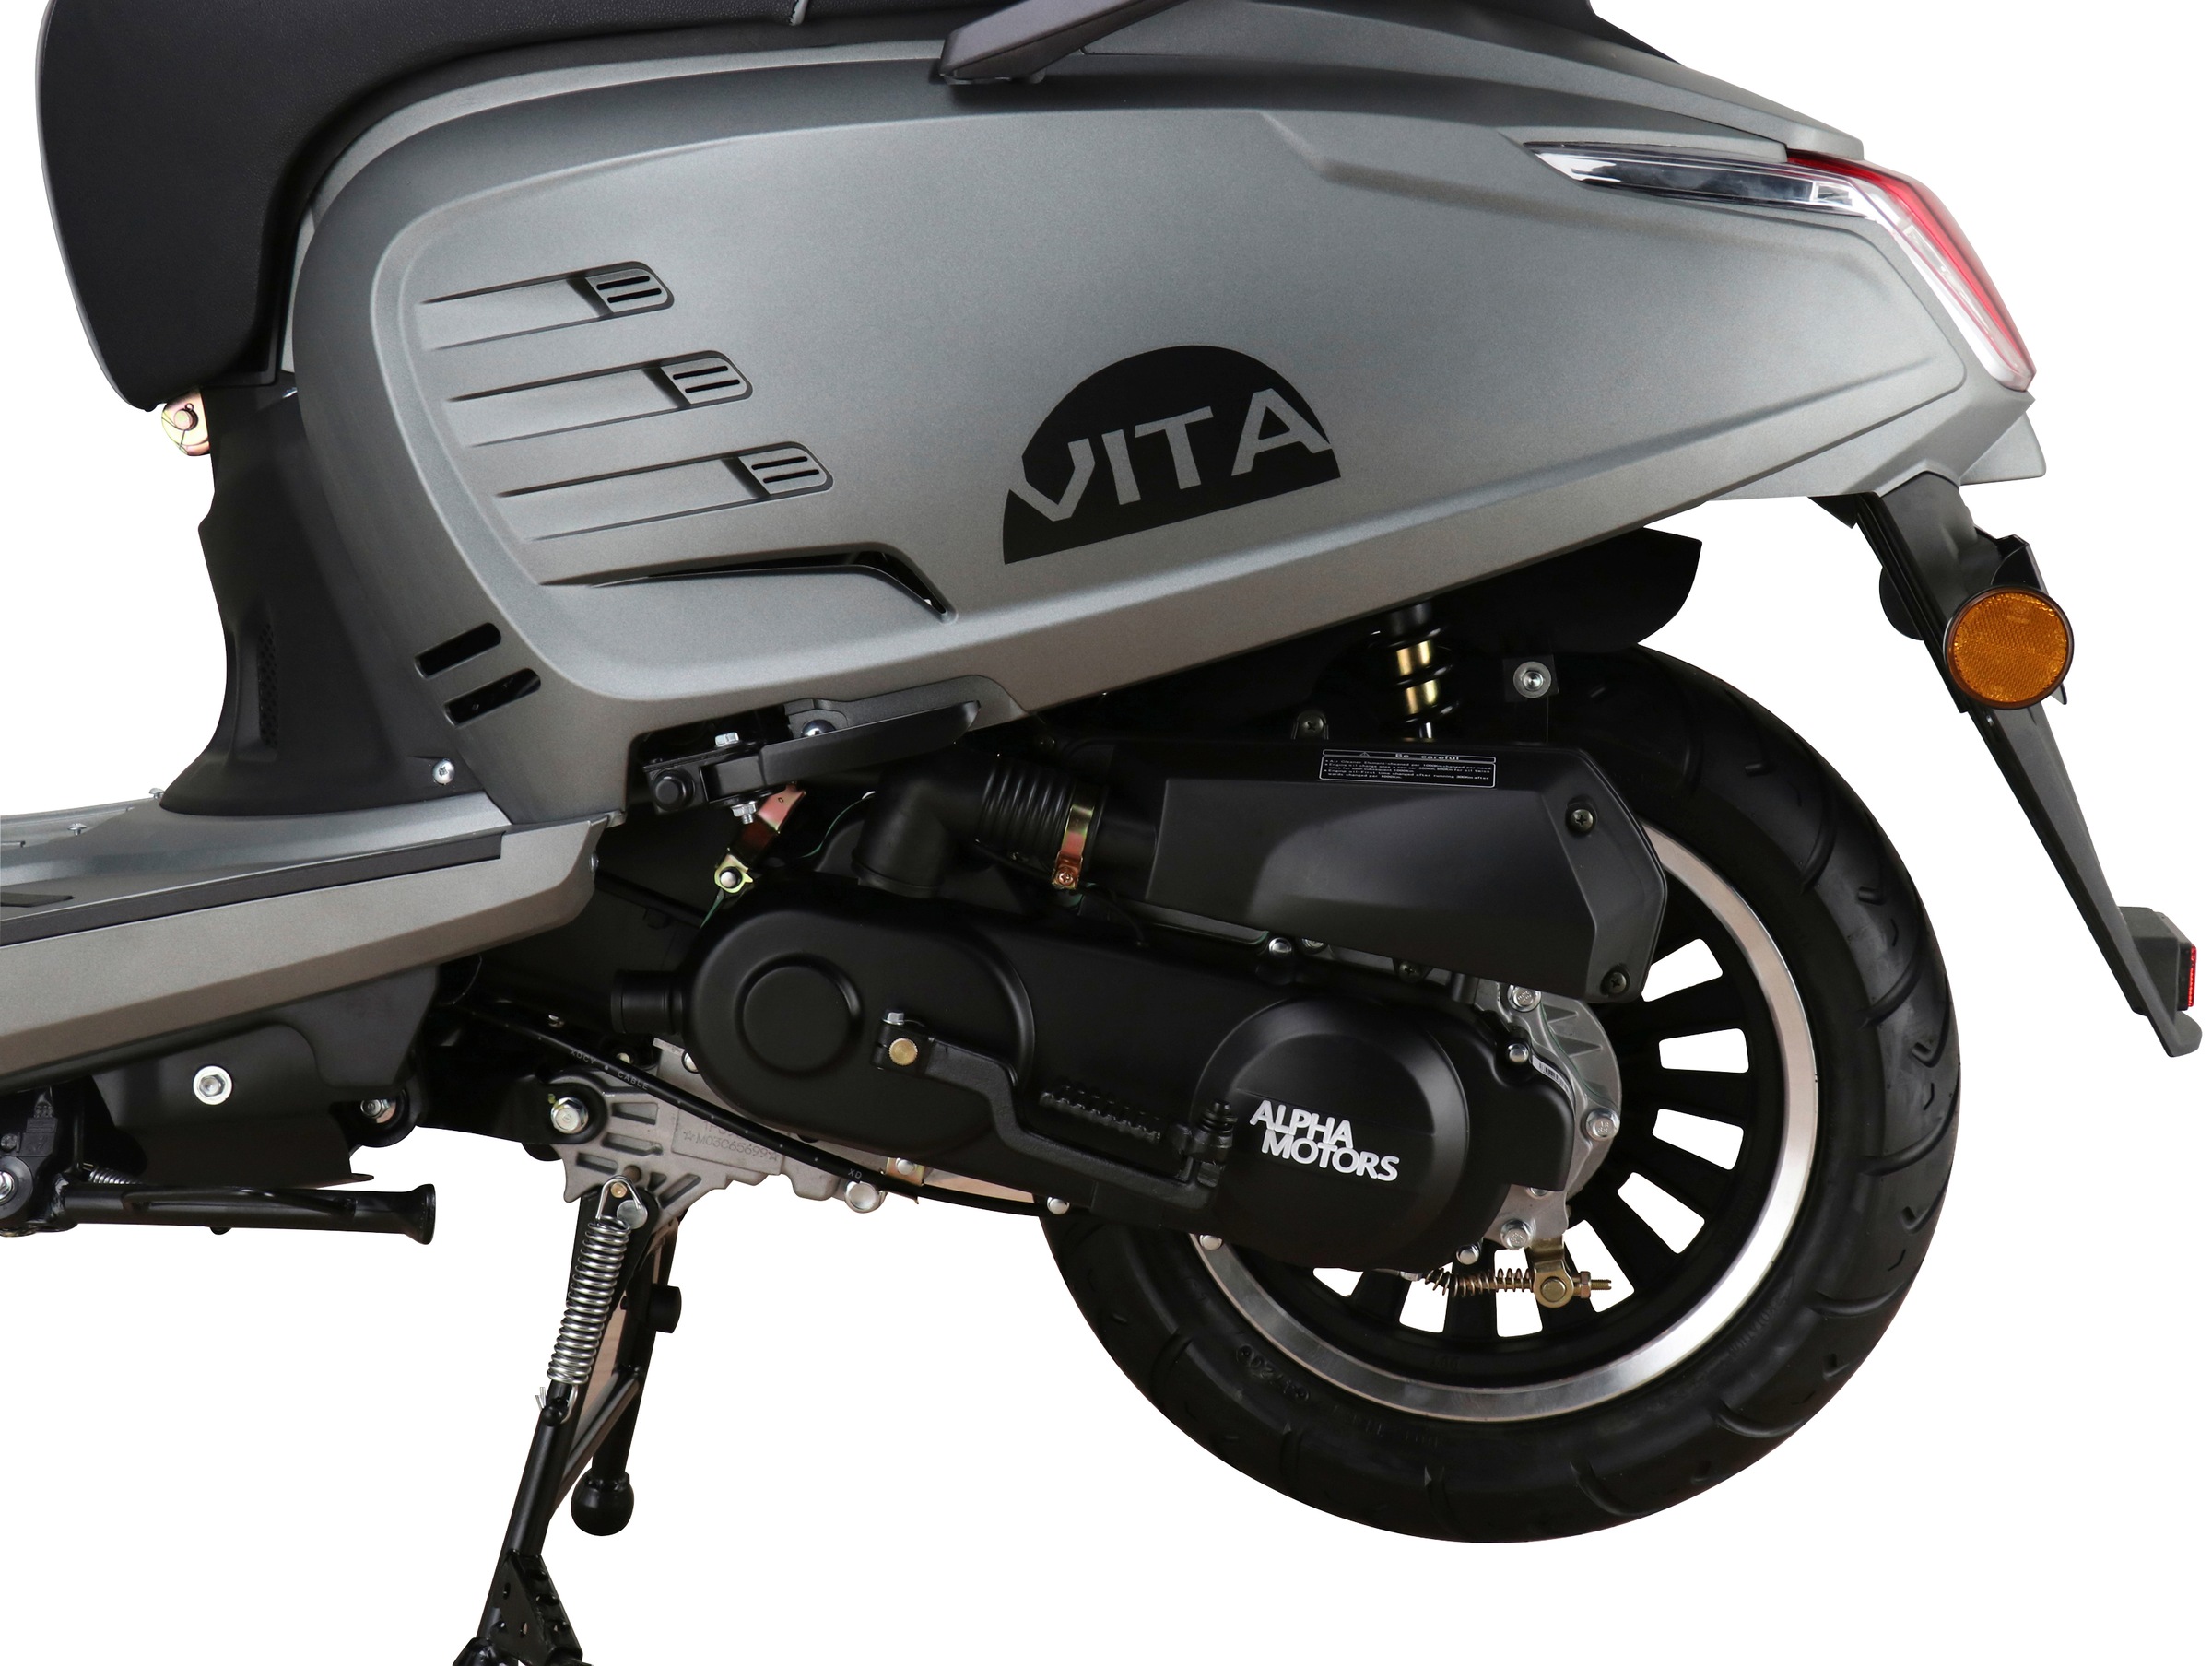 PS Raten Euro Motors BAUR 125 Alpha 85 Motorroller »Vita«, 8,56 cm³, km/h, 5, auf |